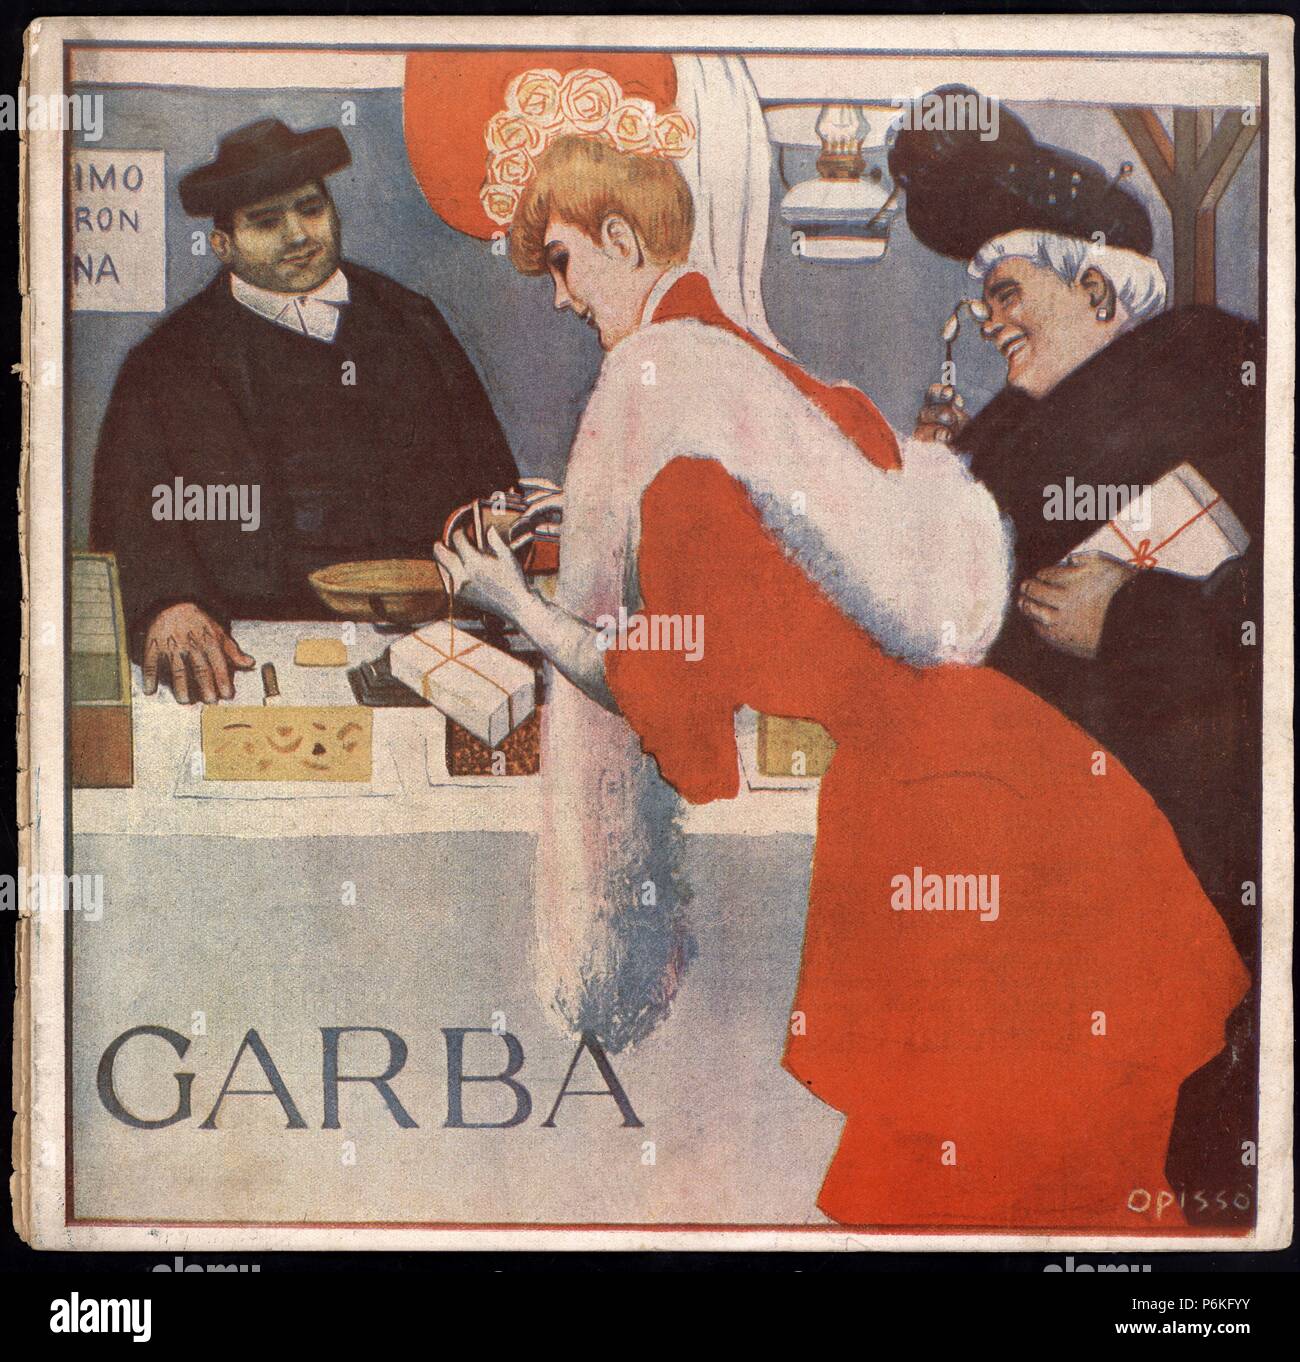 Portada de la revista literaria Garba, número 5, editada en Barcelona, diciembre de 1905. Dibujo de Opiso. Stock Photo